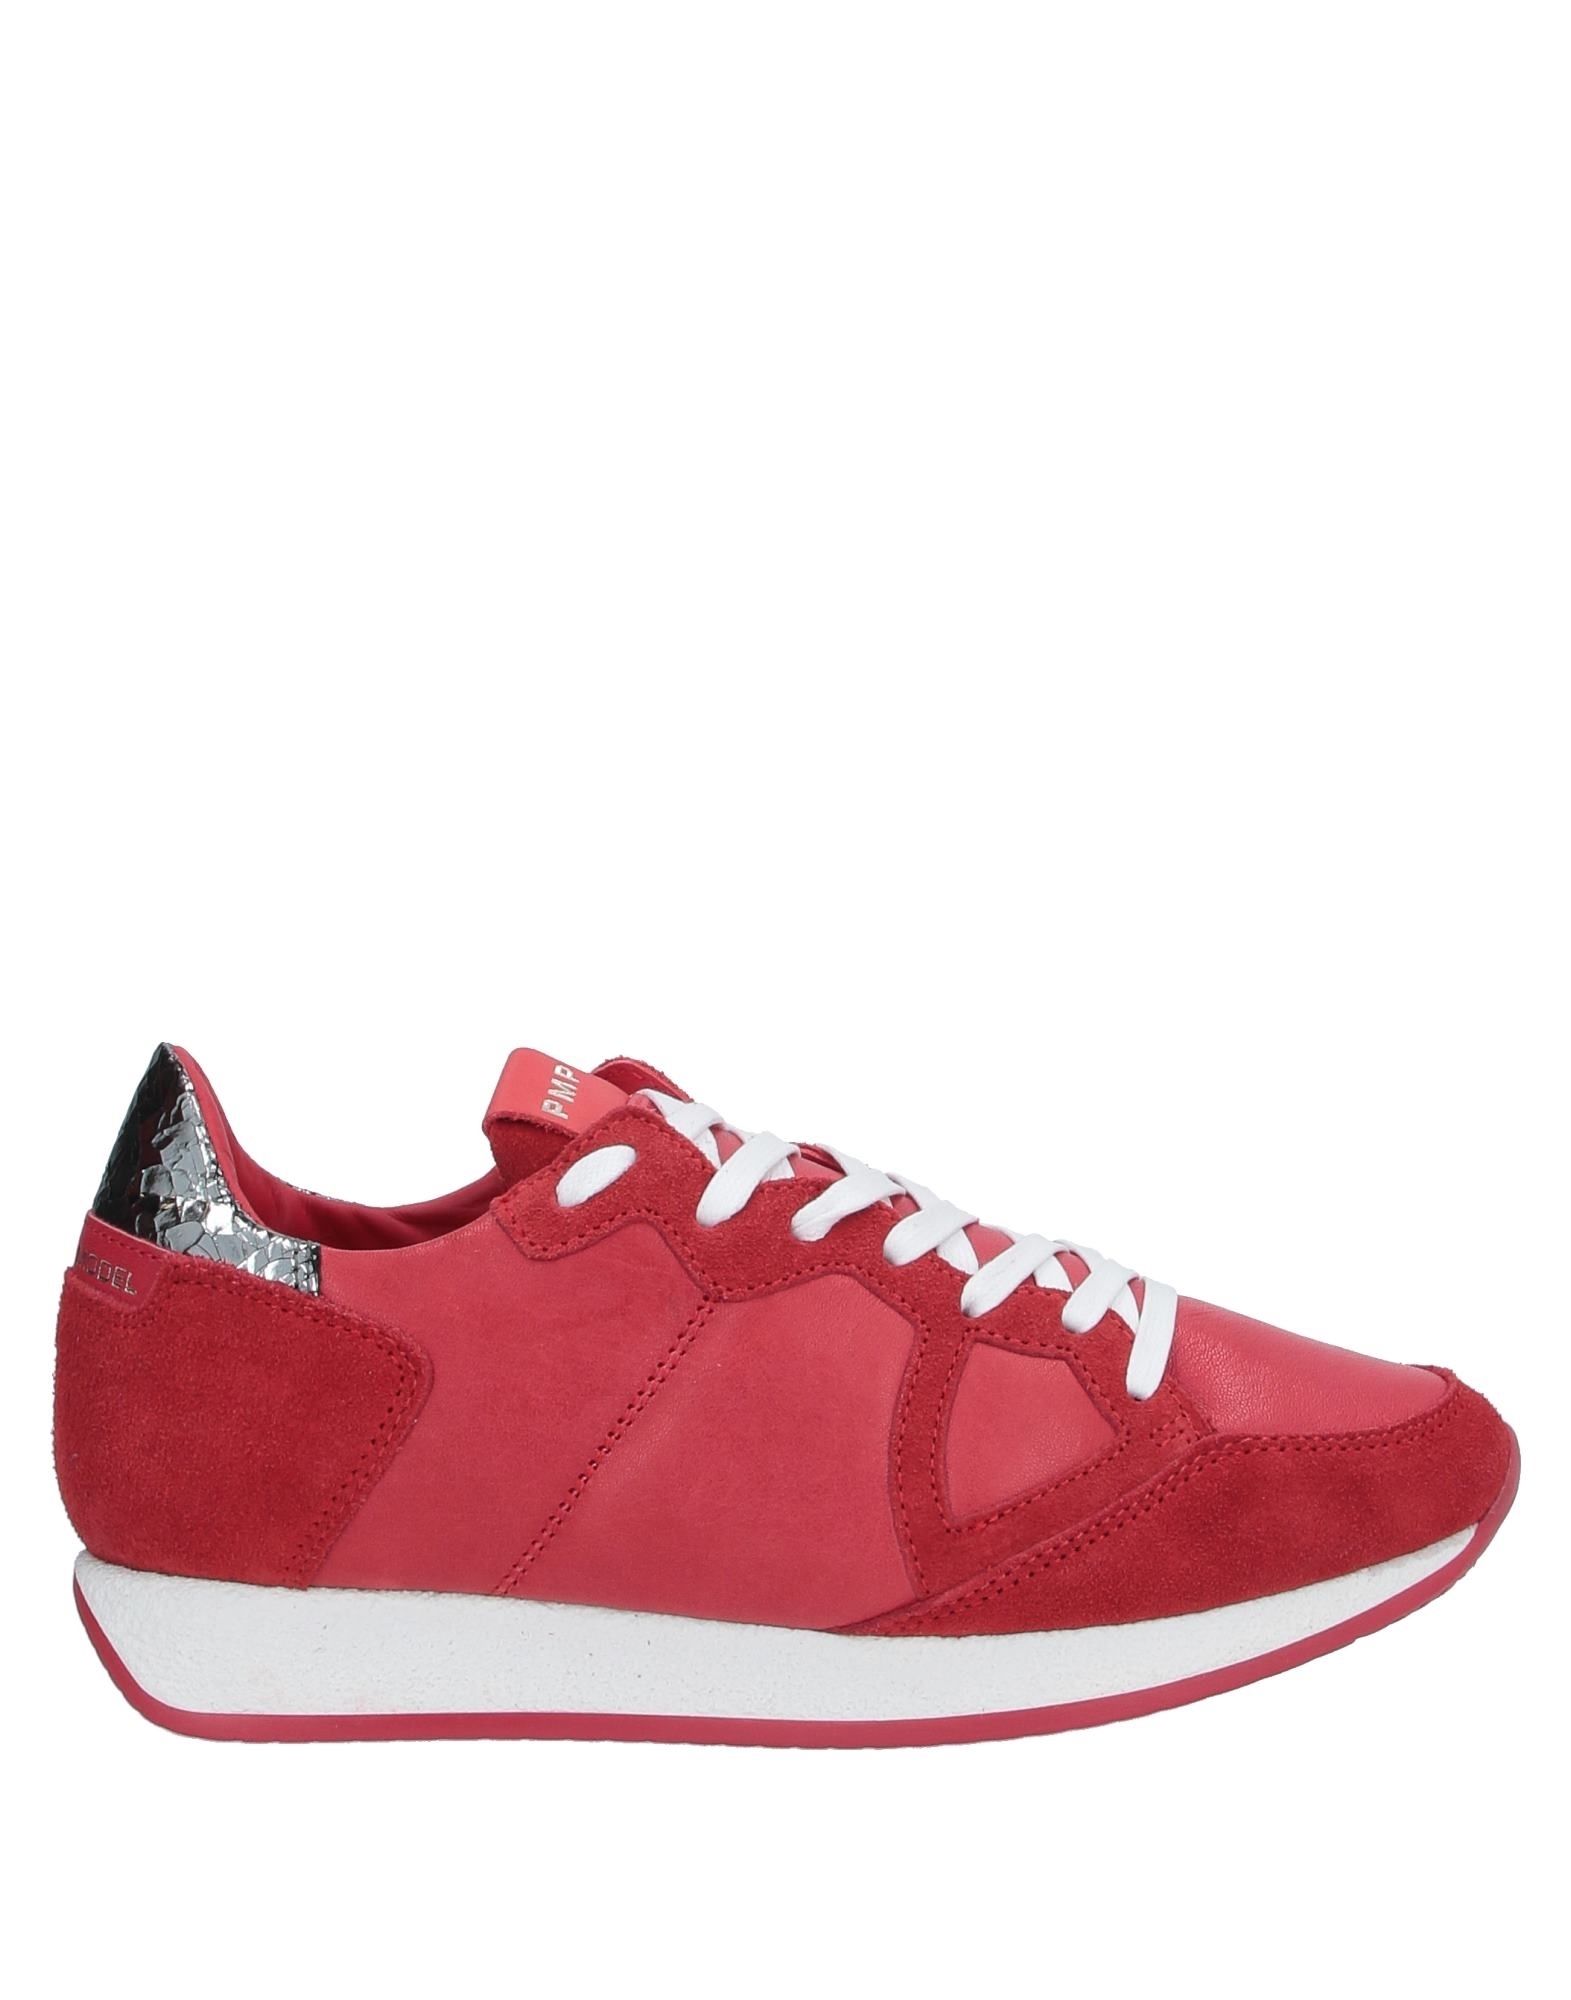 PHILIPPE MODEL Sneakers Damen Rot von PHILIPPE MODEL